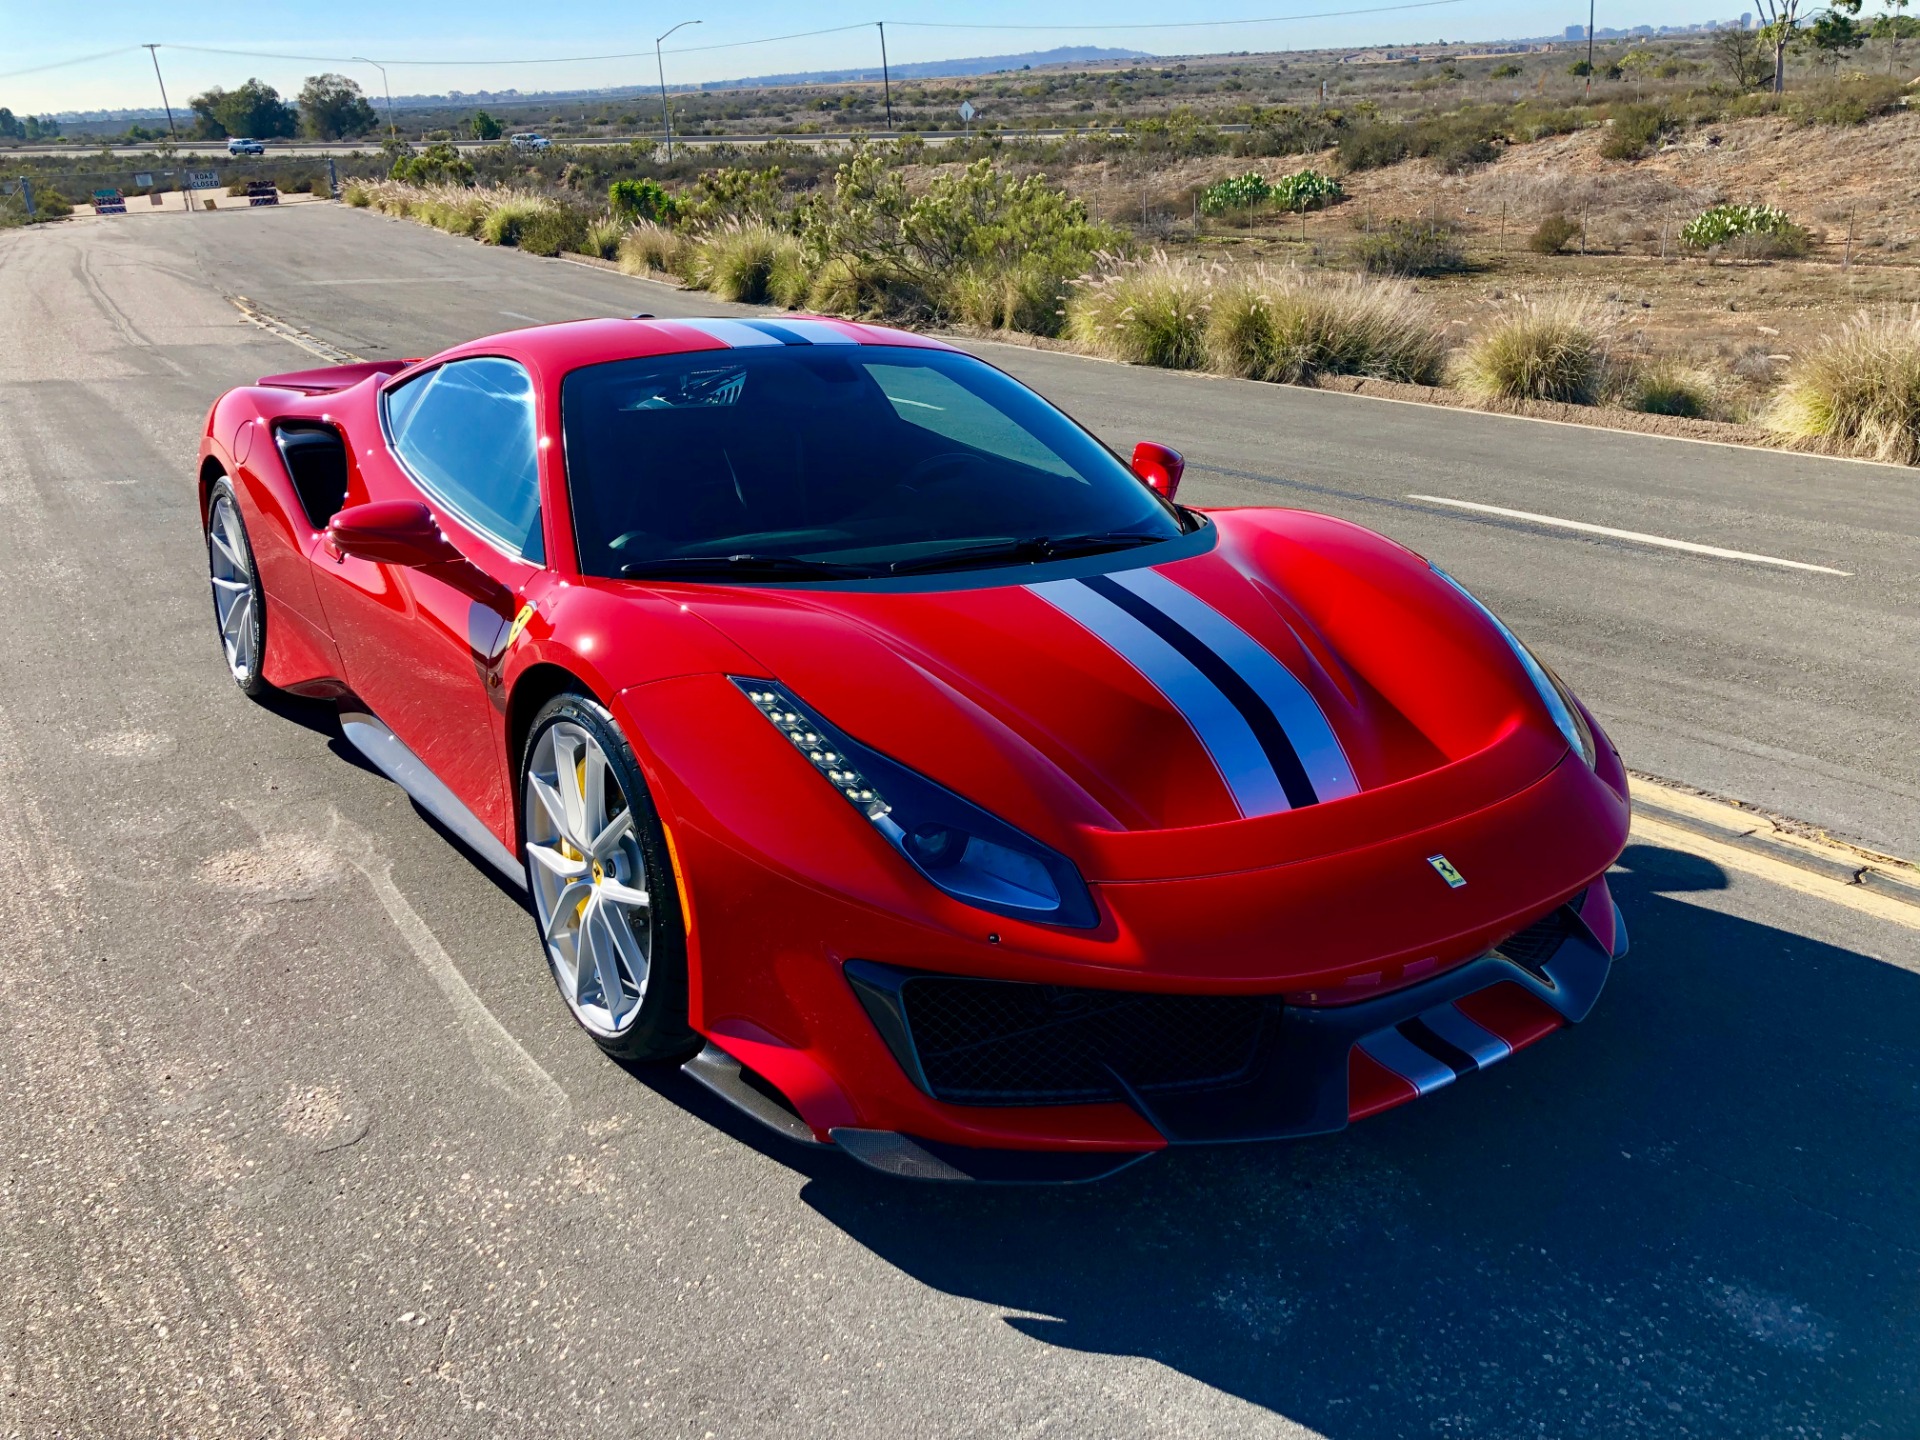 Used 2019 Ferrari 488 Pista For Sale (Special Pricing) | BJ Motors Stock #2019PISTA